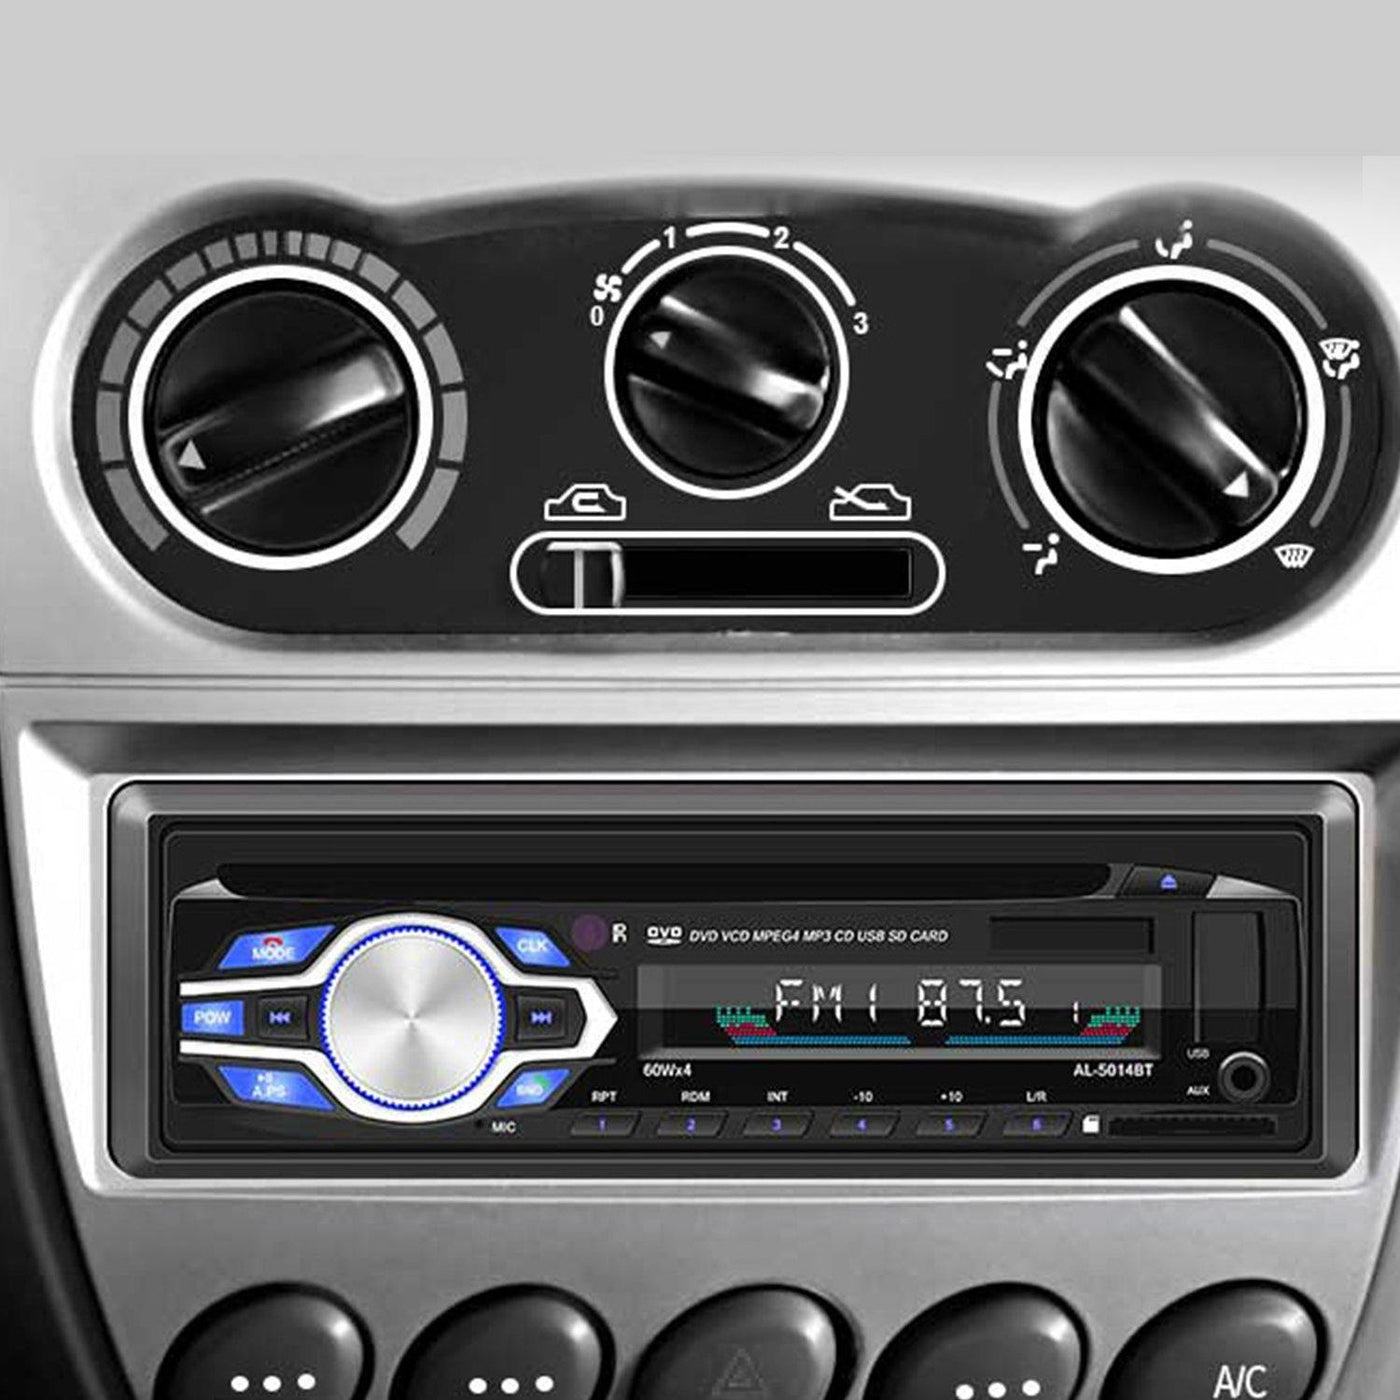 5014BT 1Din Car Bluetooth DVD CD Player Remote Control MP3 FM Audio Radio  60WX4